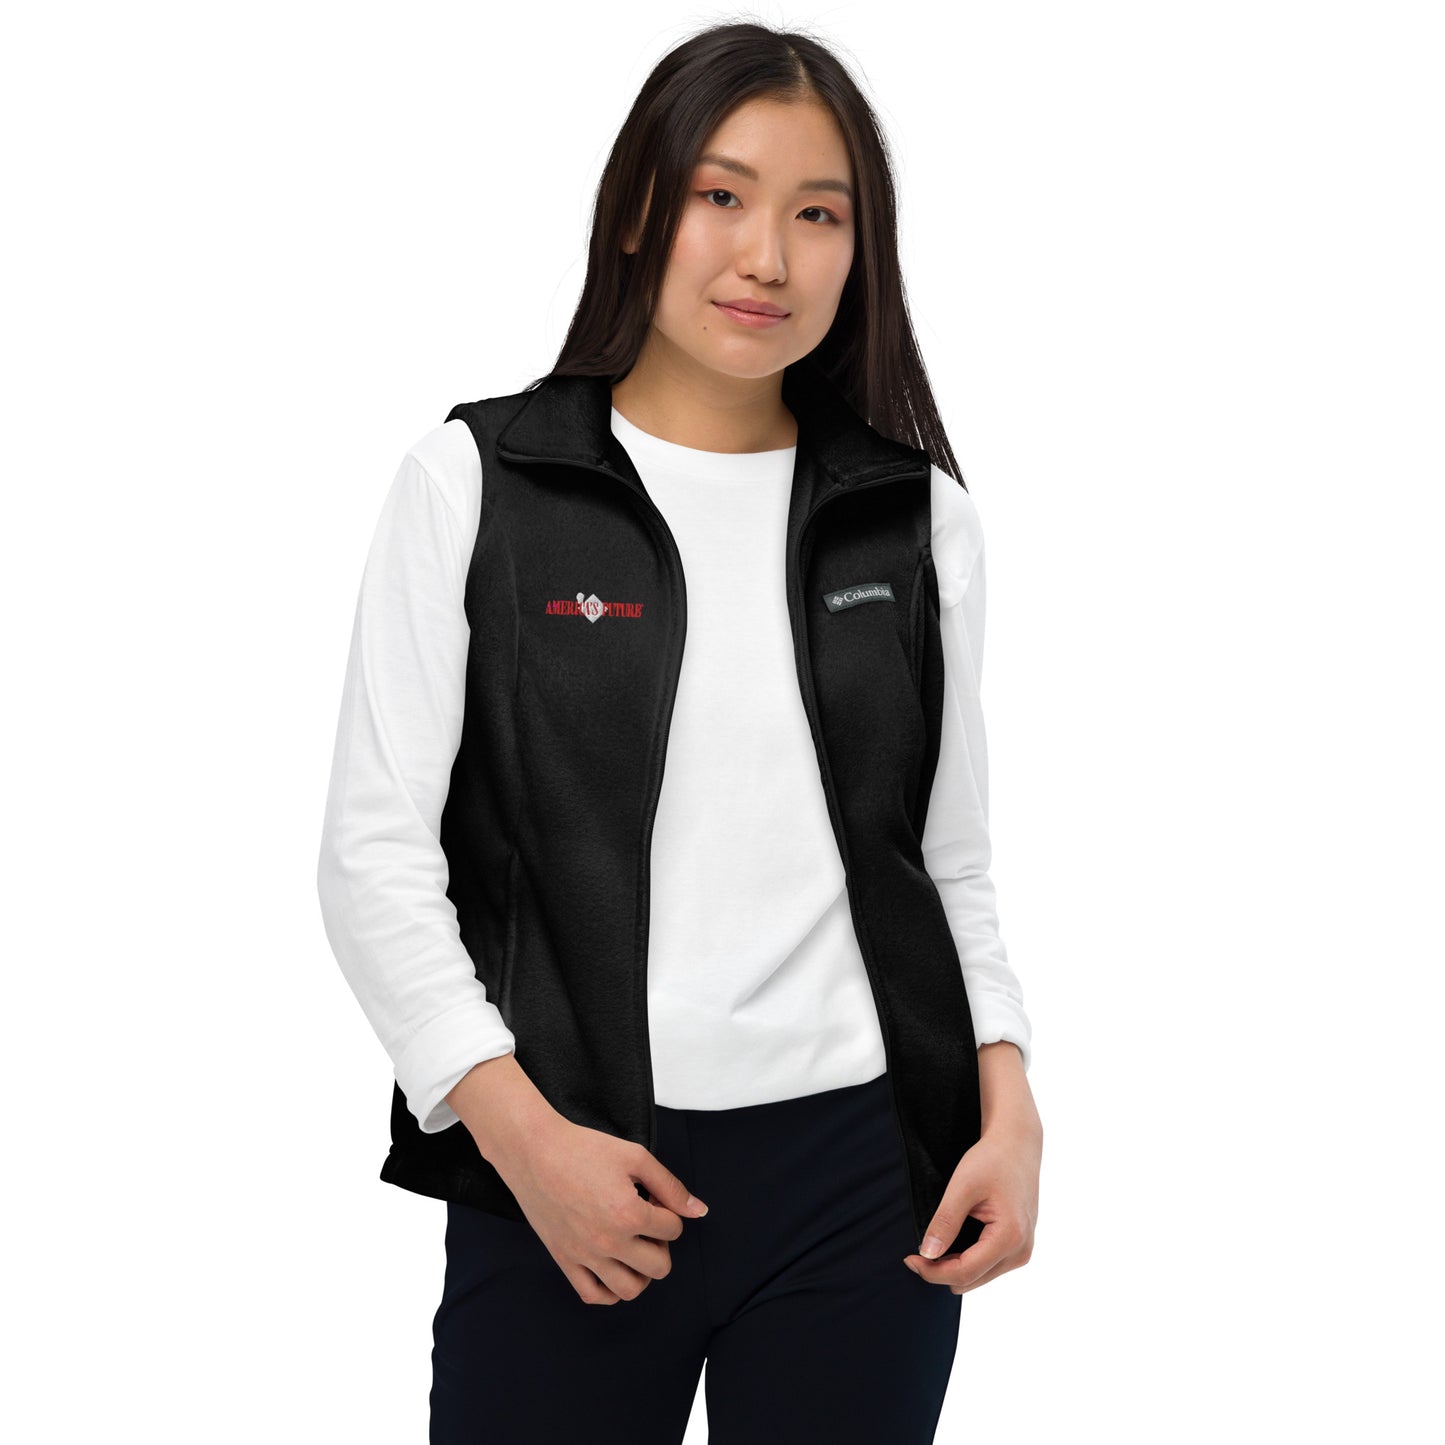 America's Future - Women’s Columbia Fleece Vest